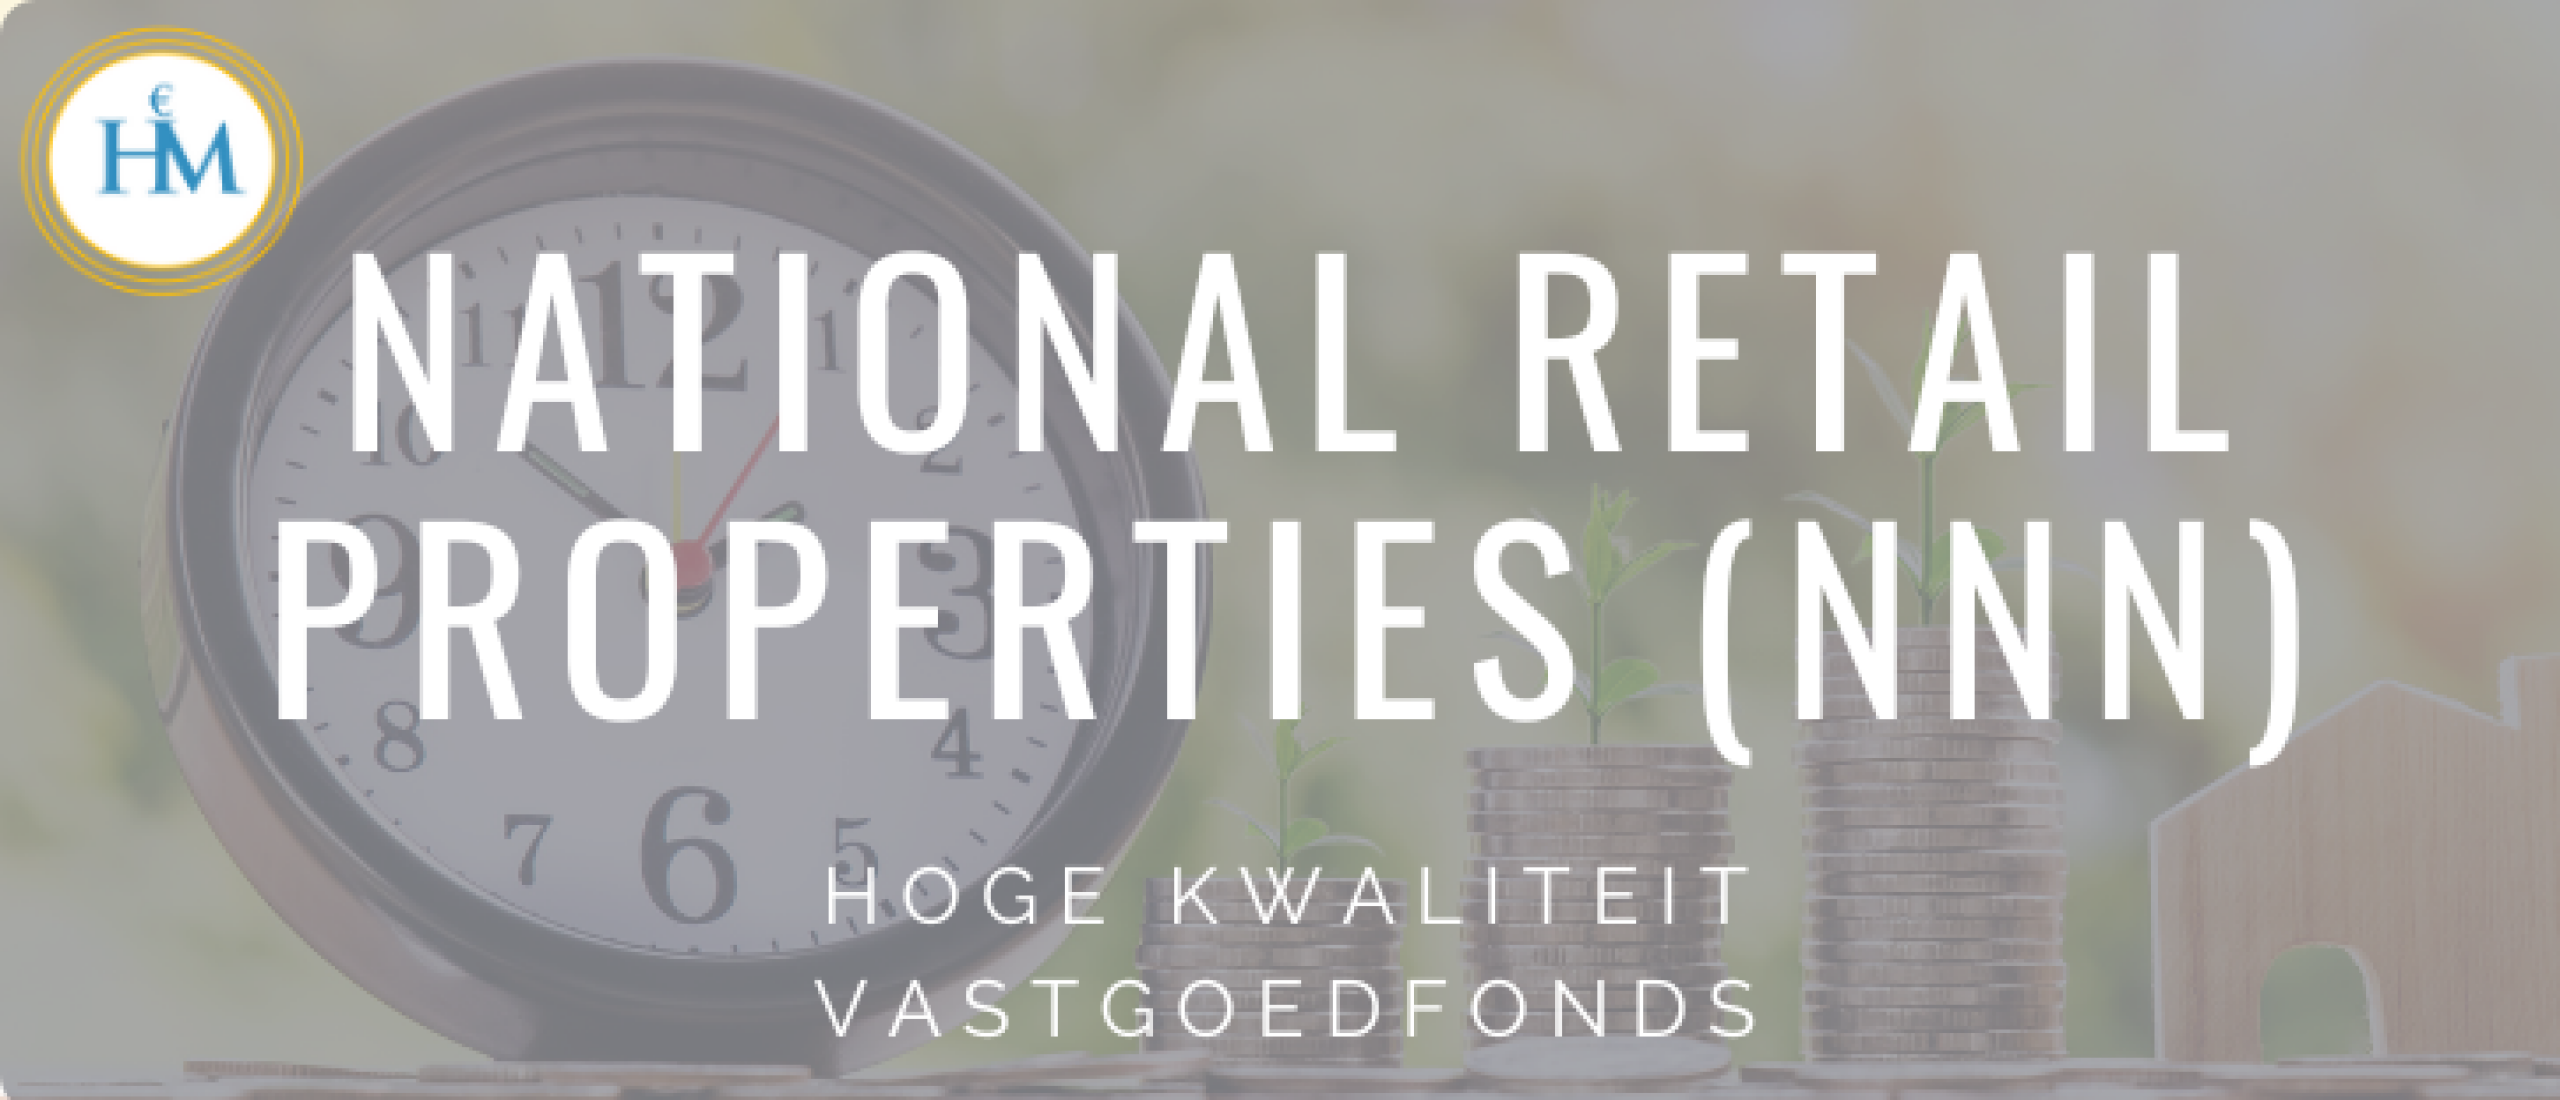 National Retail Properties (NNN) REIT Aandelen Analyse | 5,5% Dividend Vastgoedfonds